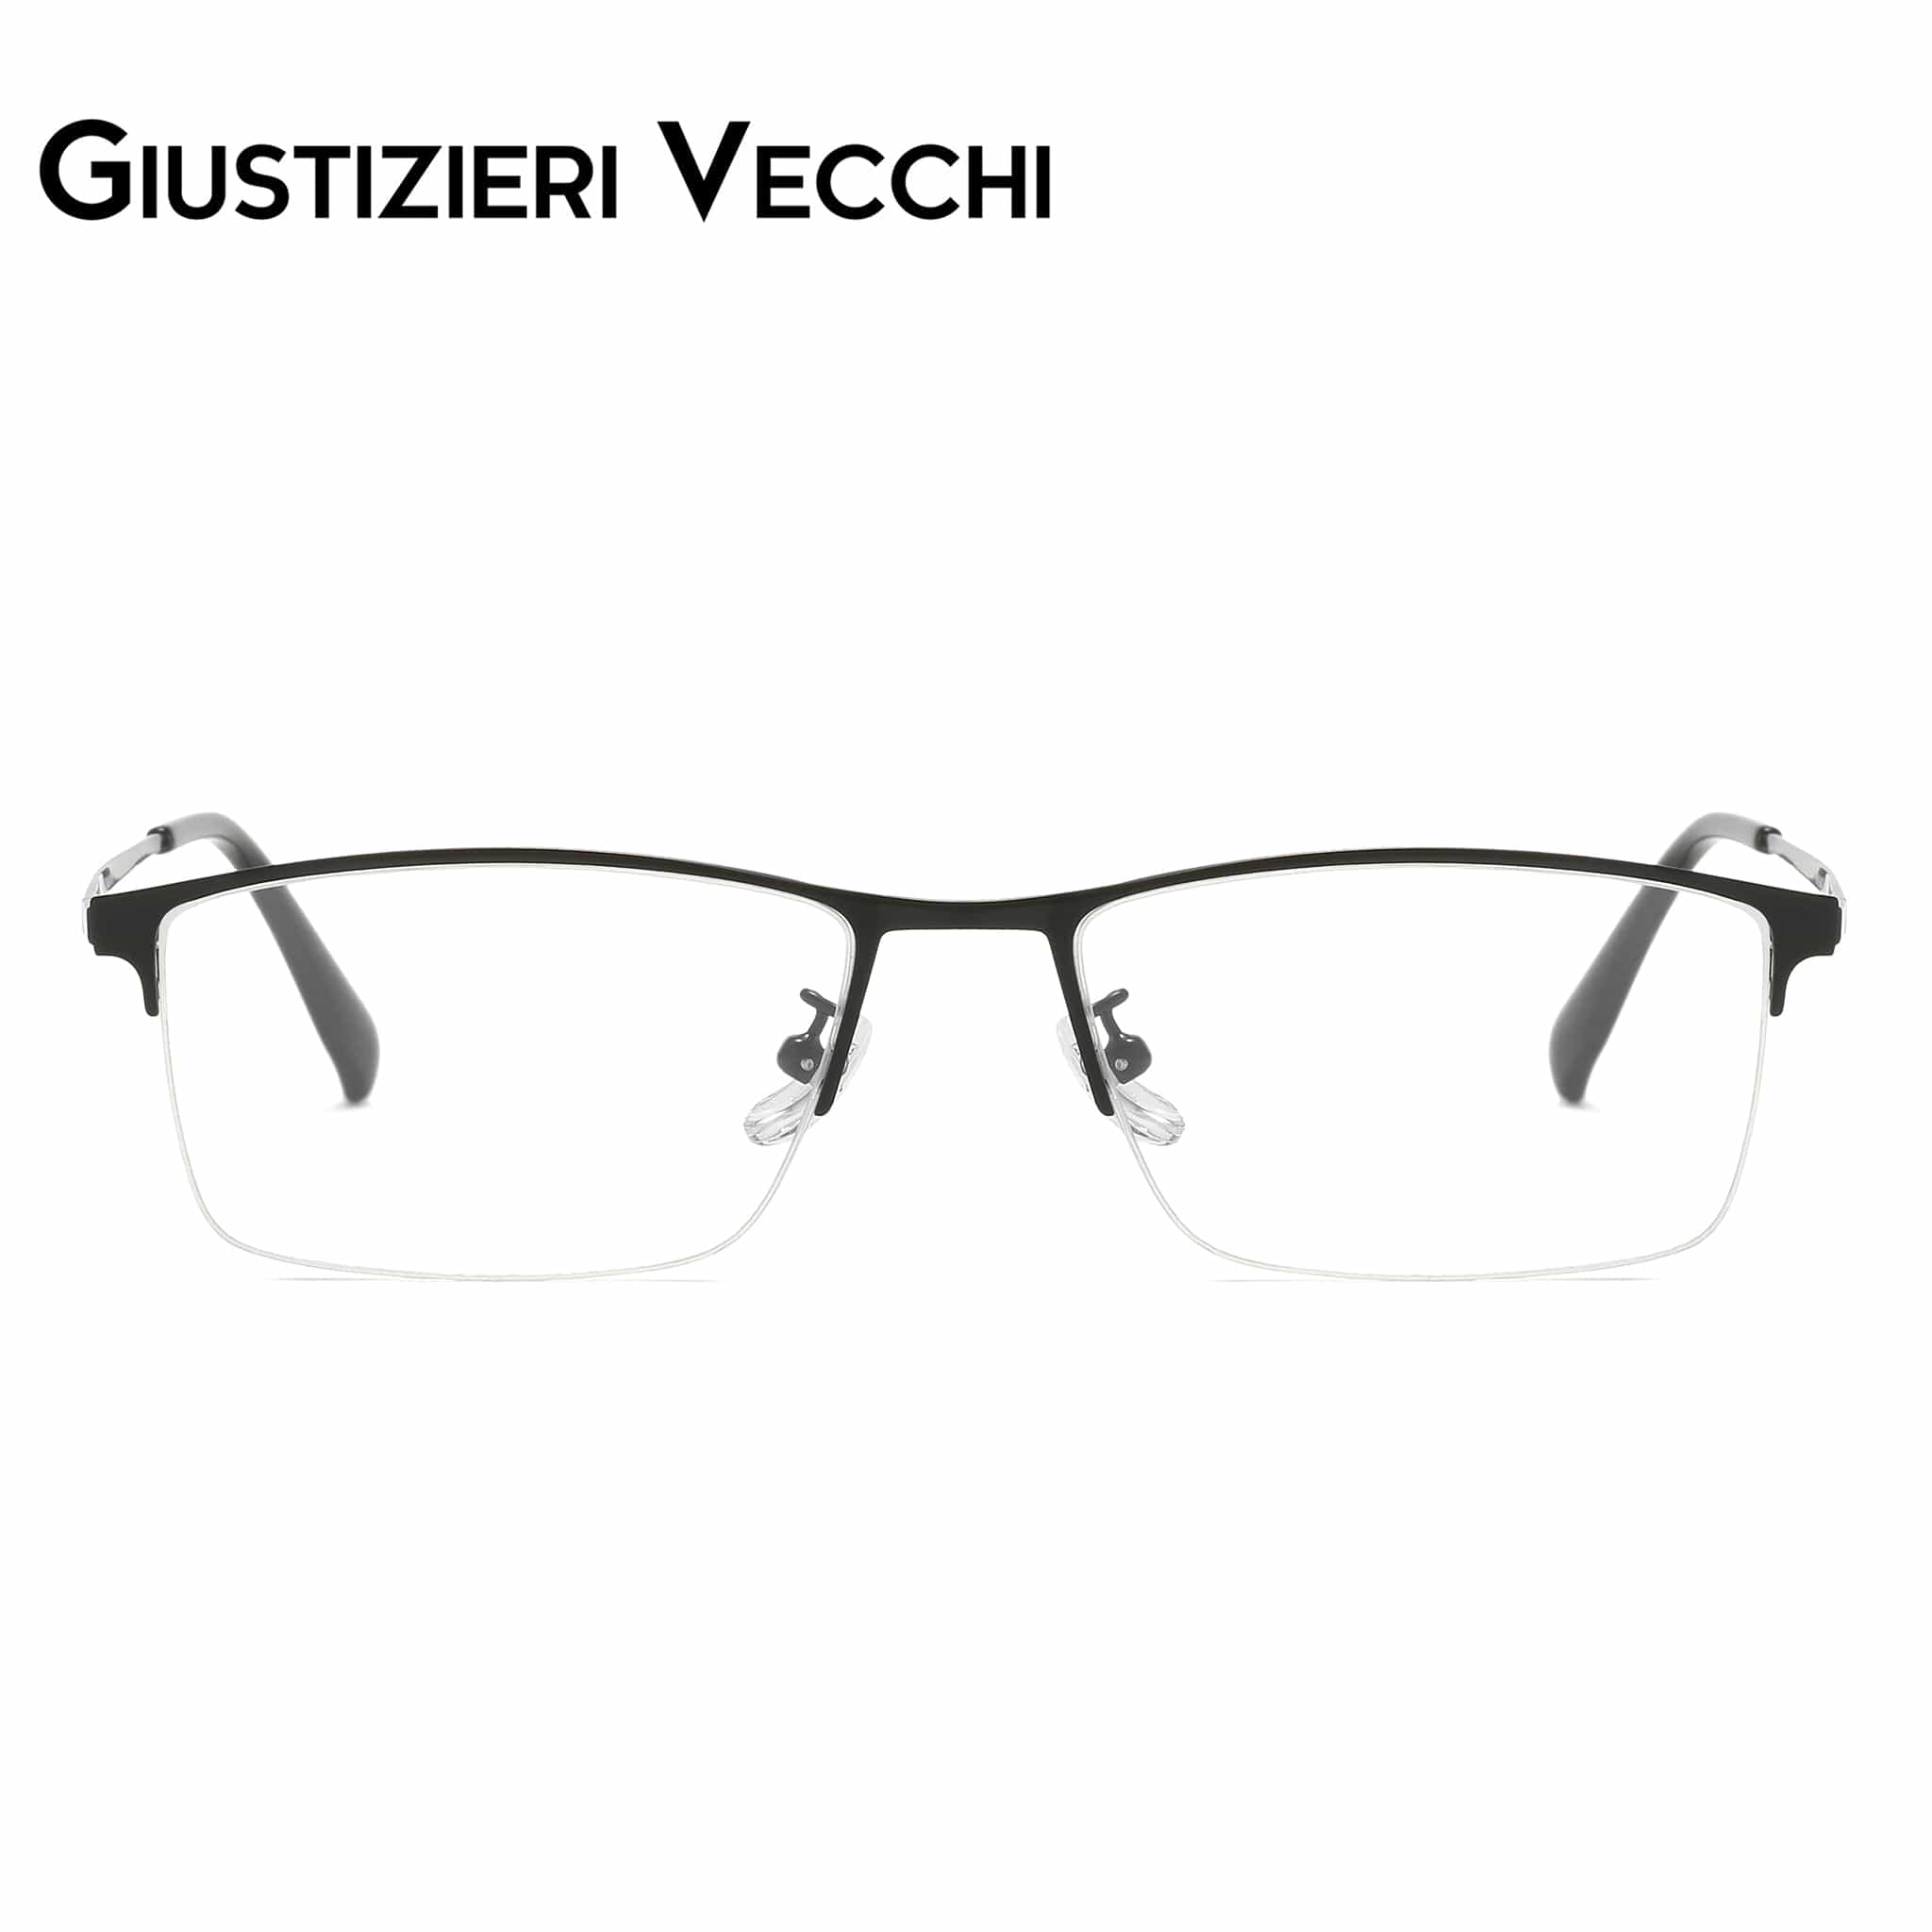 GIUSTIZIERI VECCHI Eyeglasses Medium / Black Thunderbolt Uno